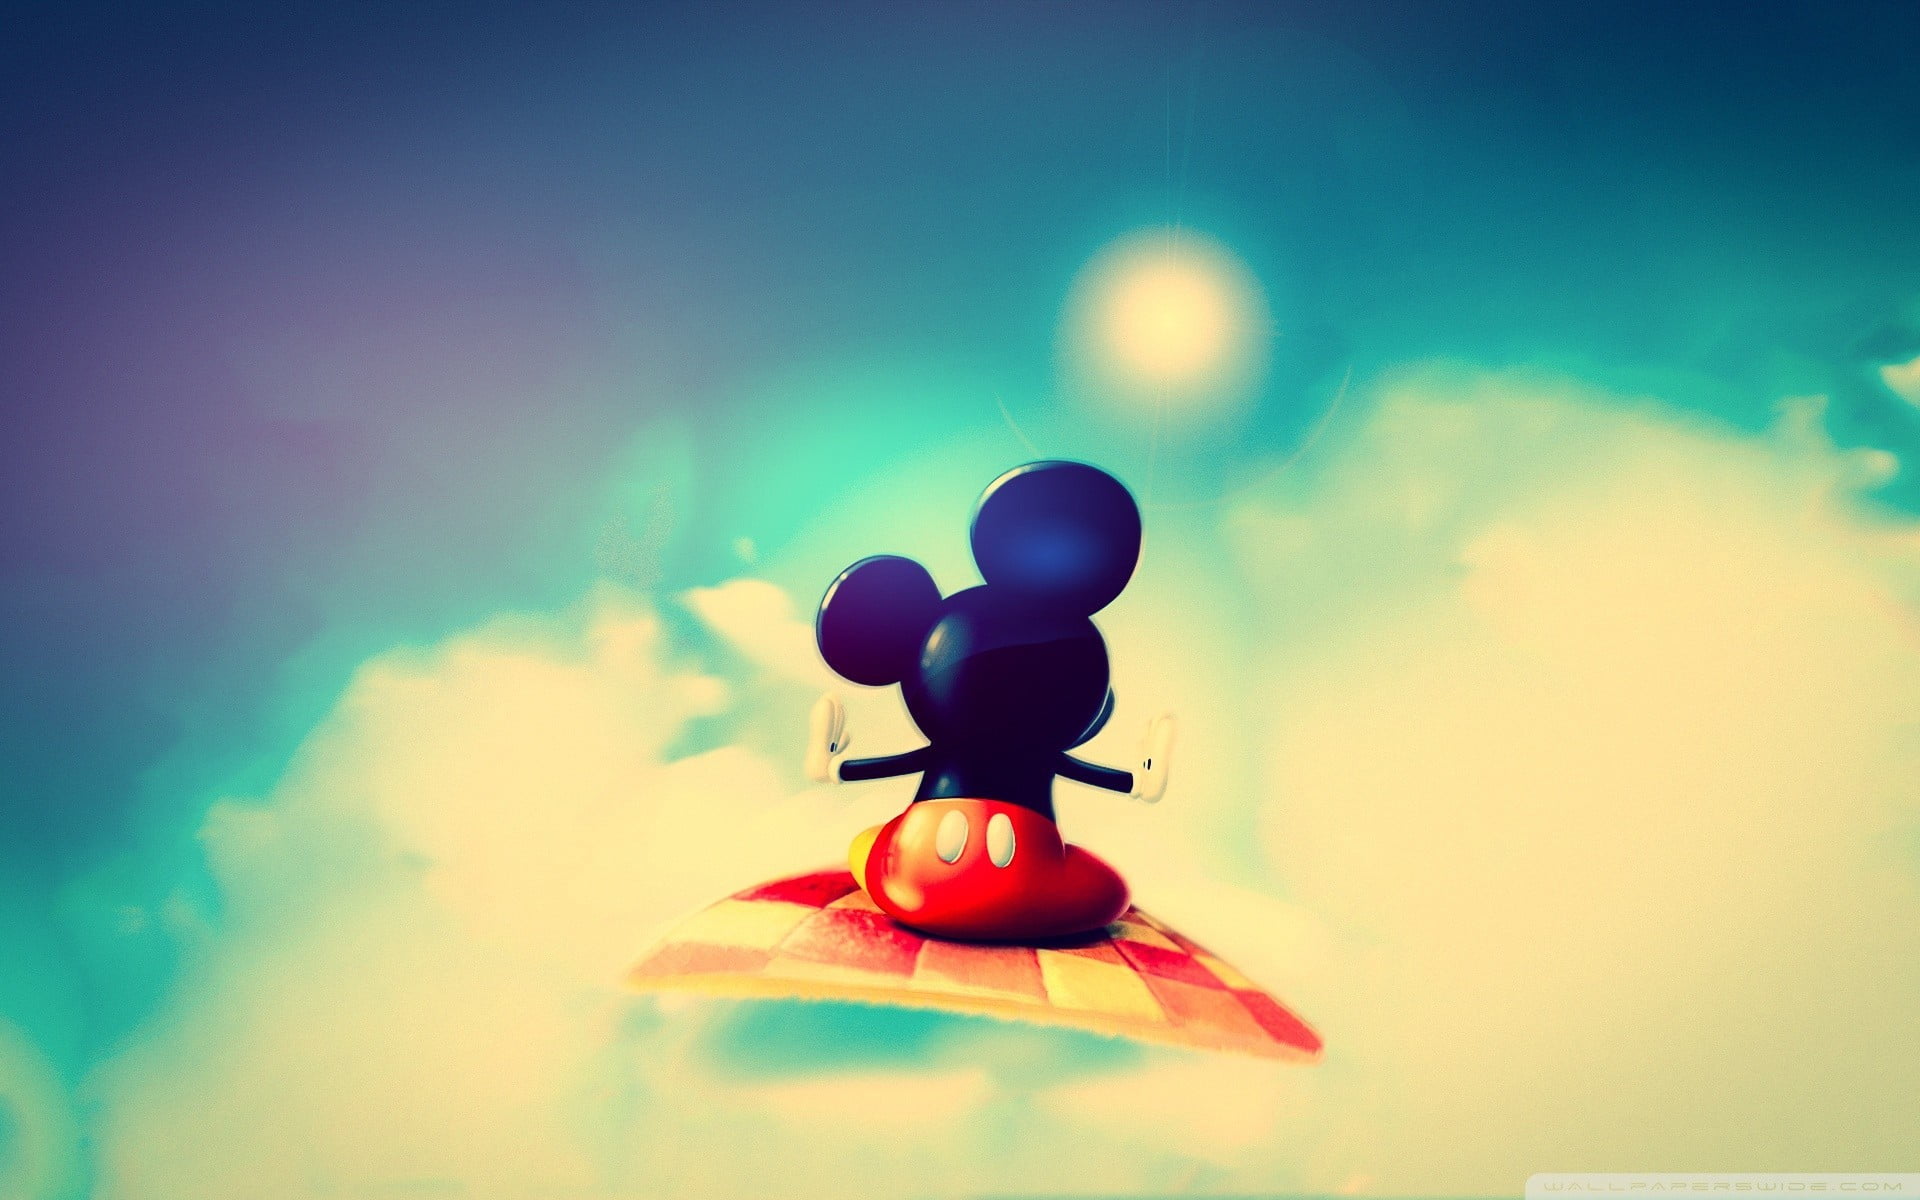 Mickey mouse digital wallpaper, Disney, sky, representation, no people